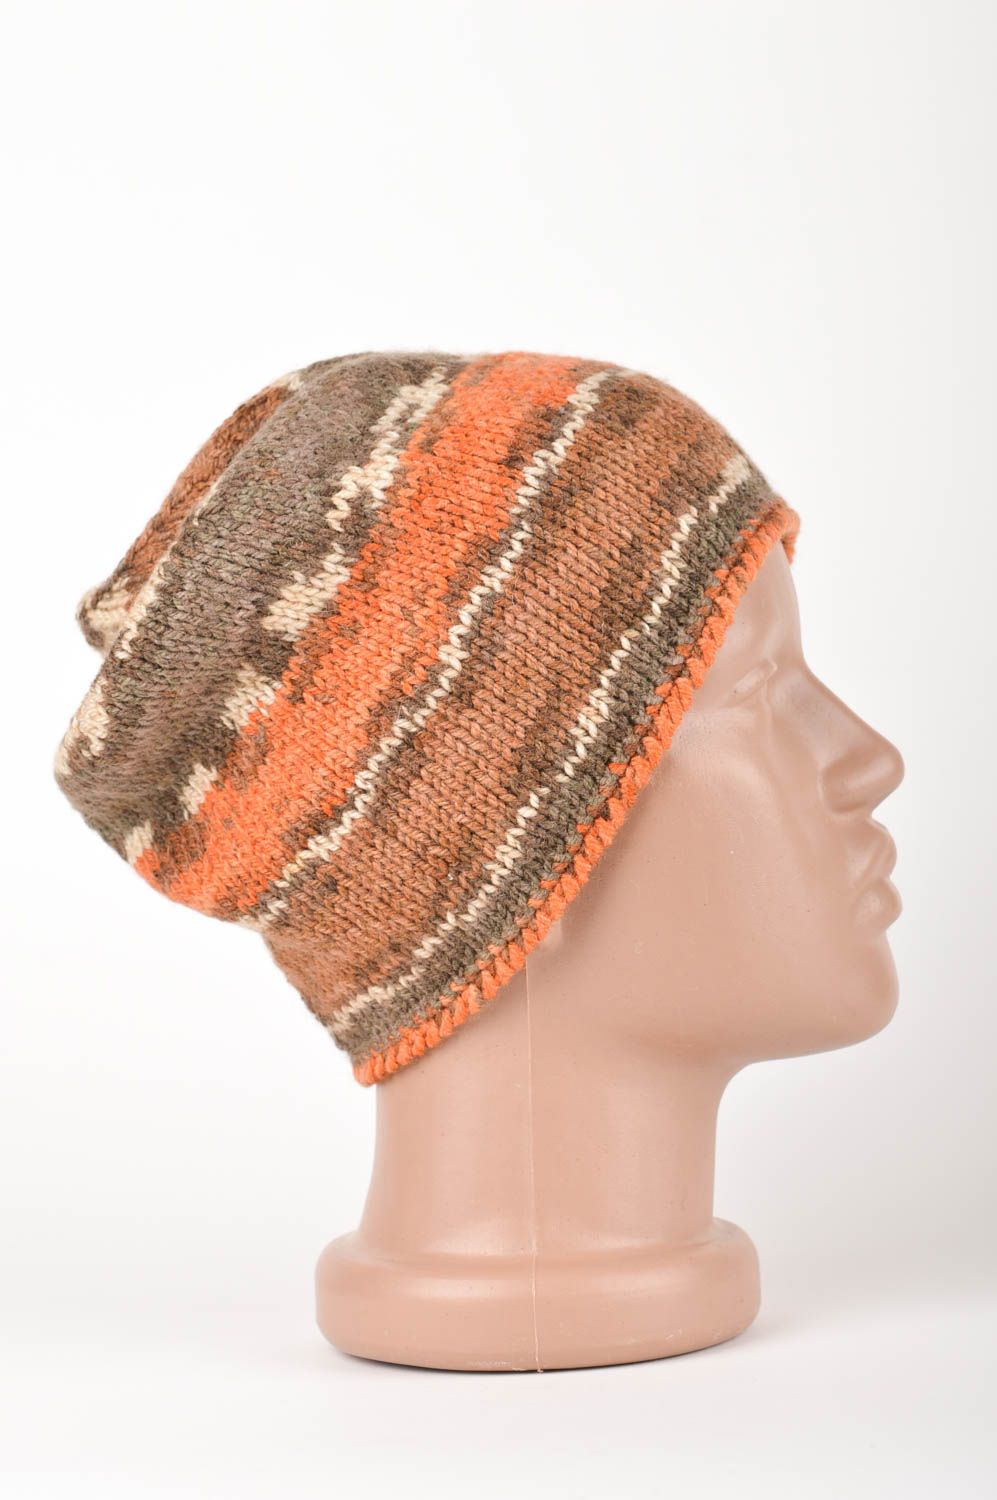 Crochet hat handmade winter hat crochet accessories best hats gifts ideas photo 3